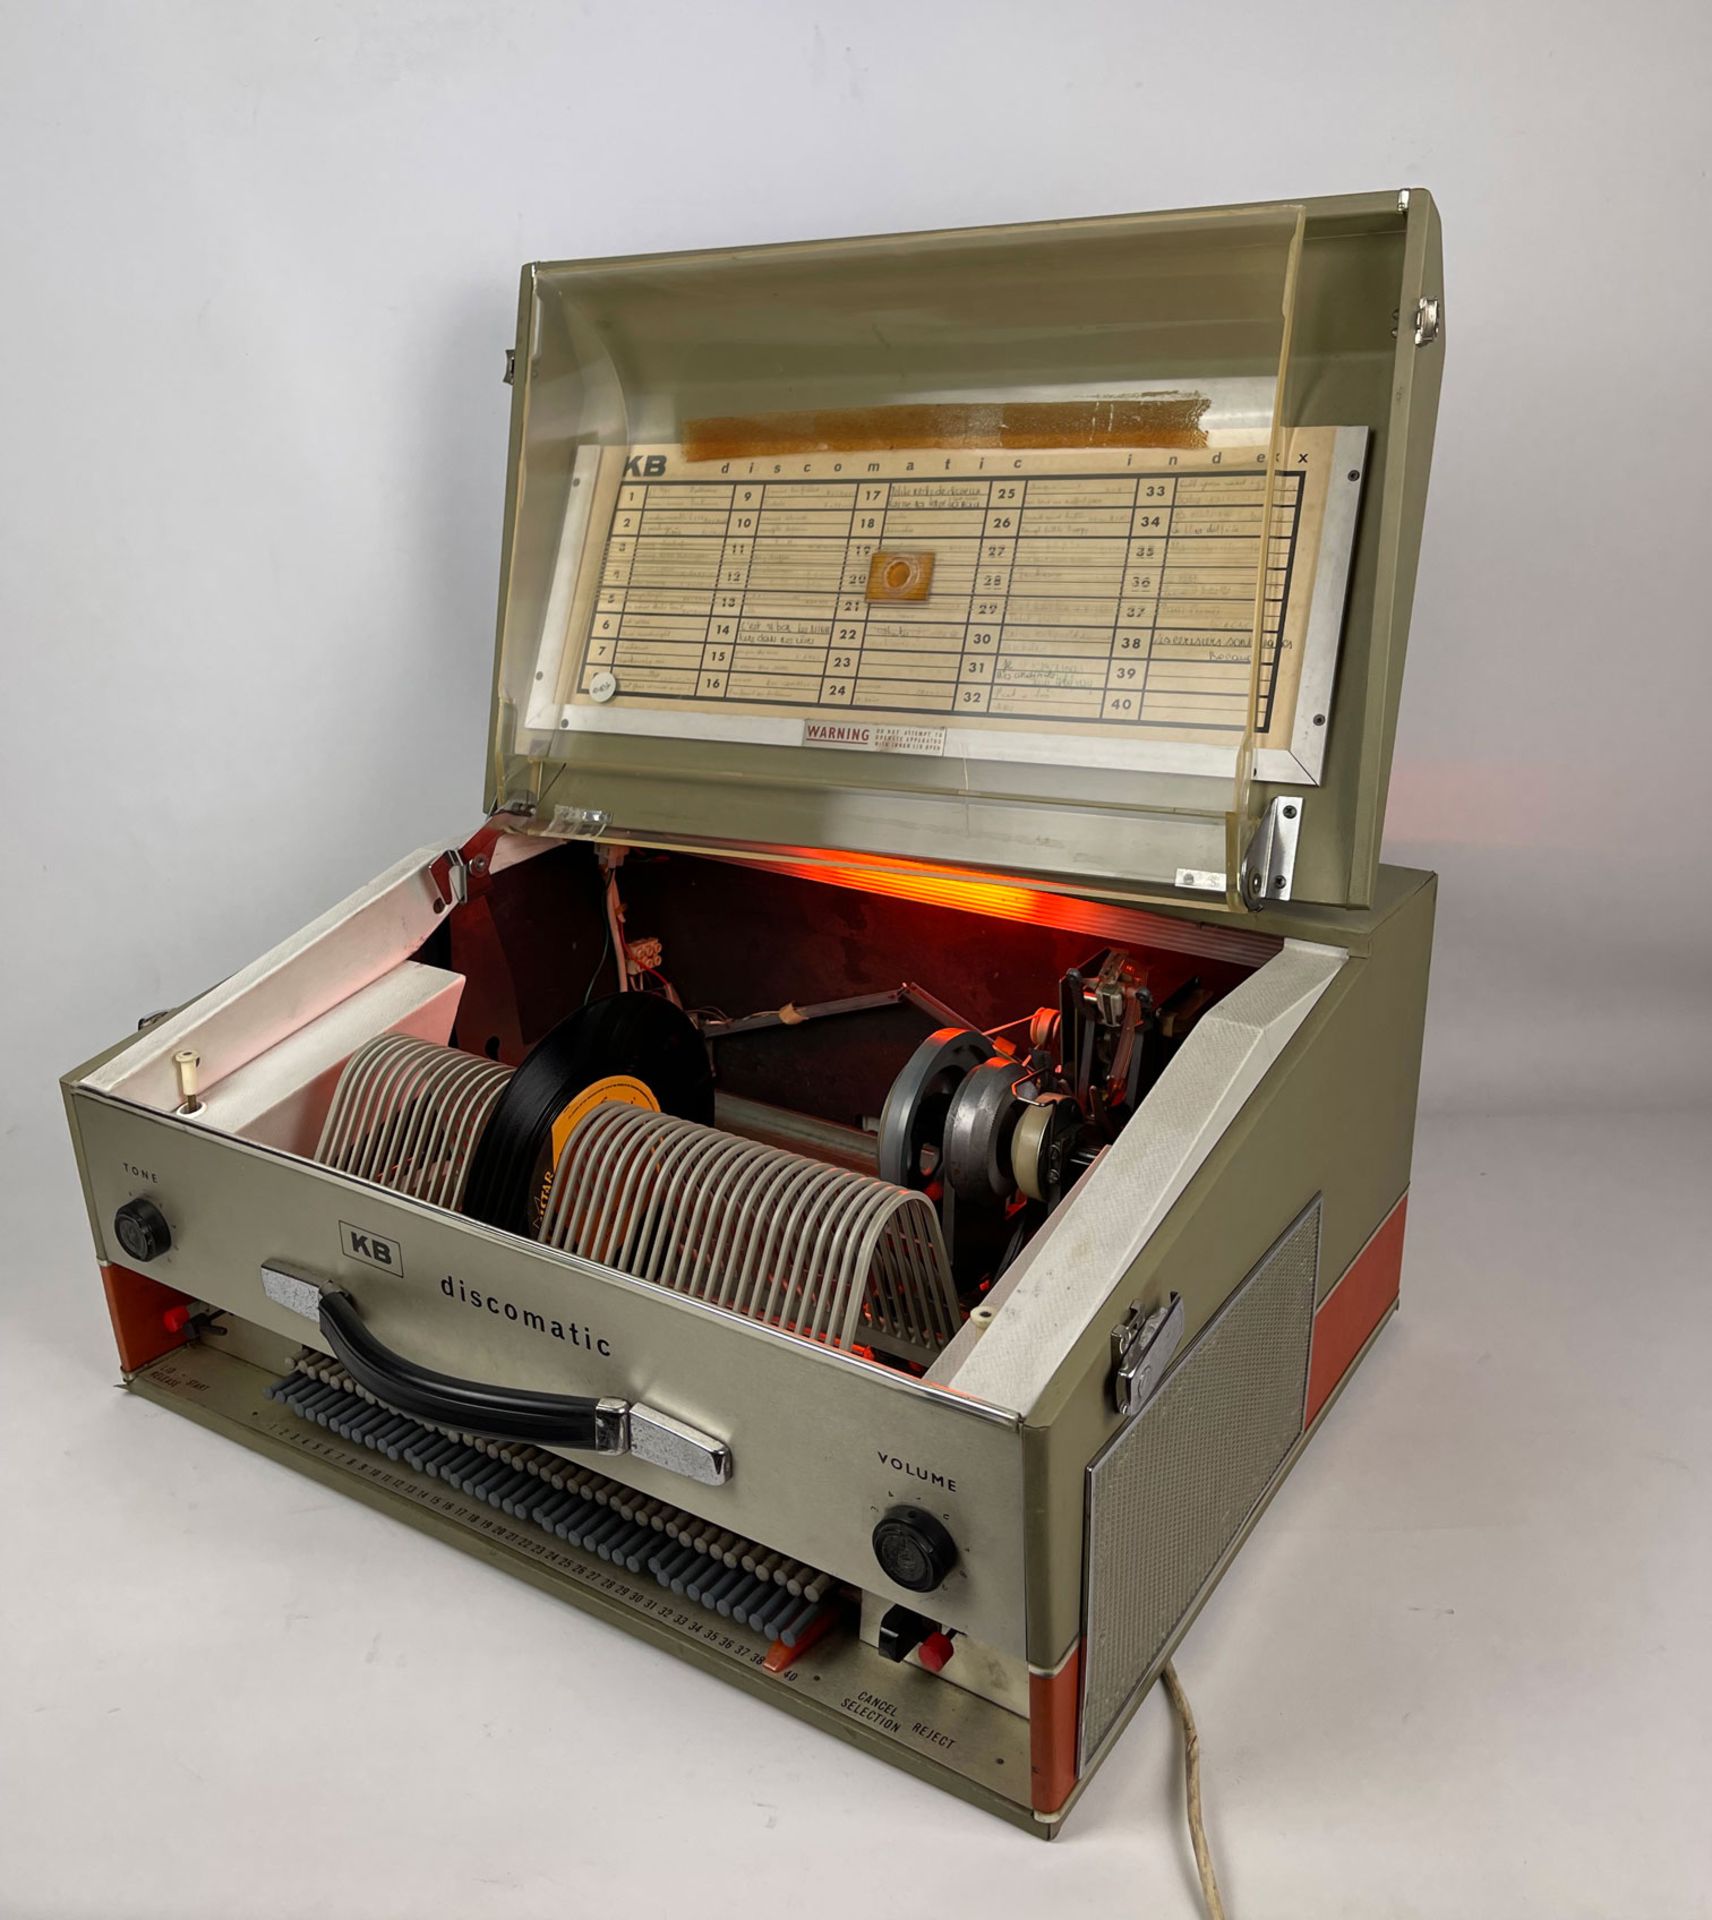 1965 Kolster-Brandes KB Discomatic Portable Jukebox - Image 2 of 11